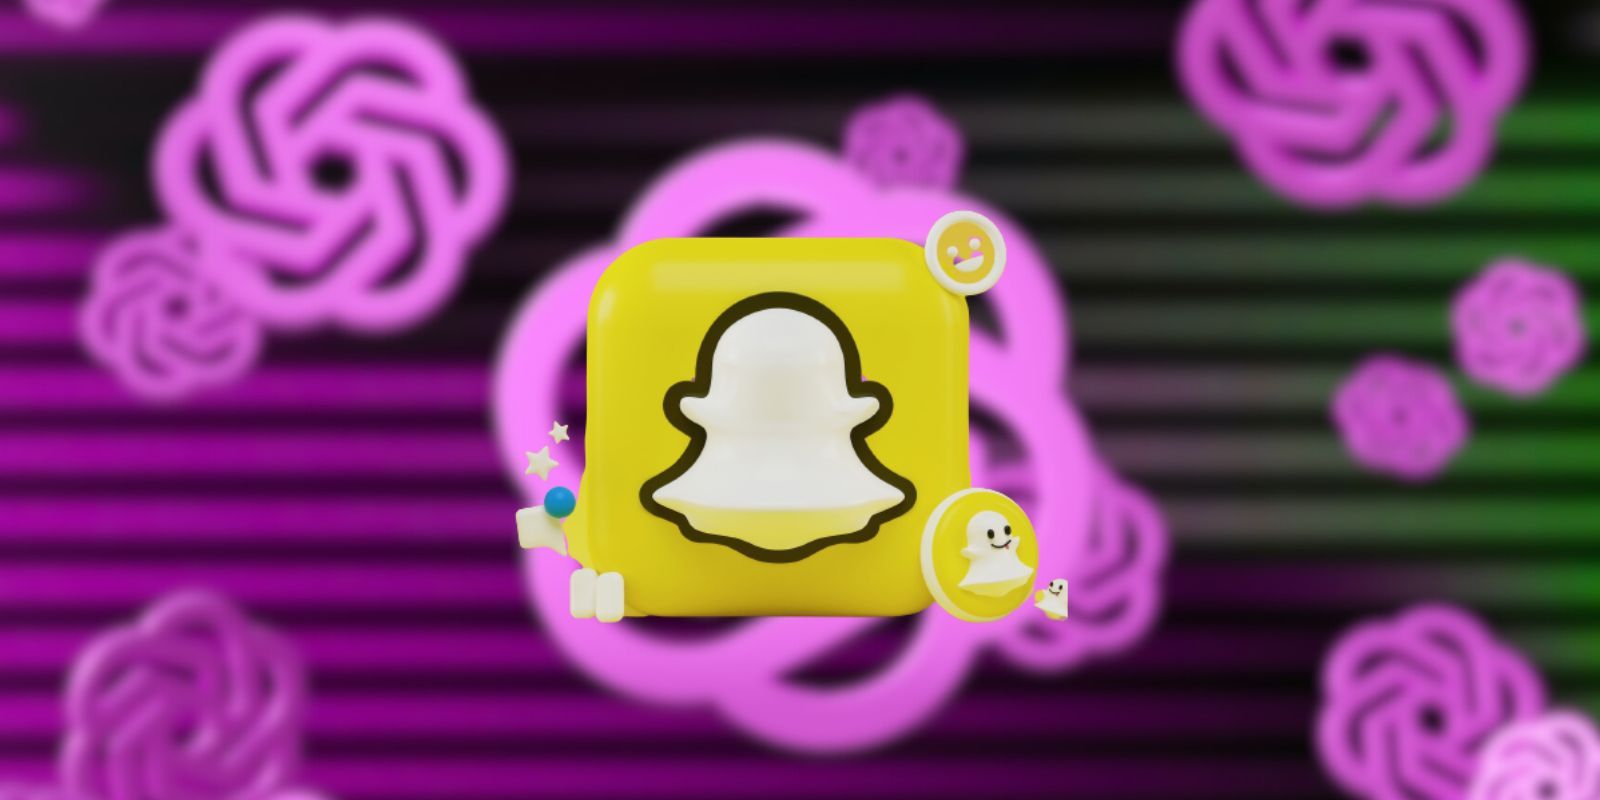 Snapchat Logo on top of Blurred OpenAI Logos